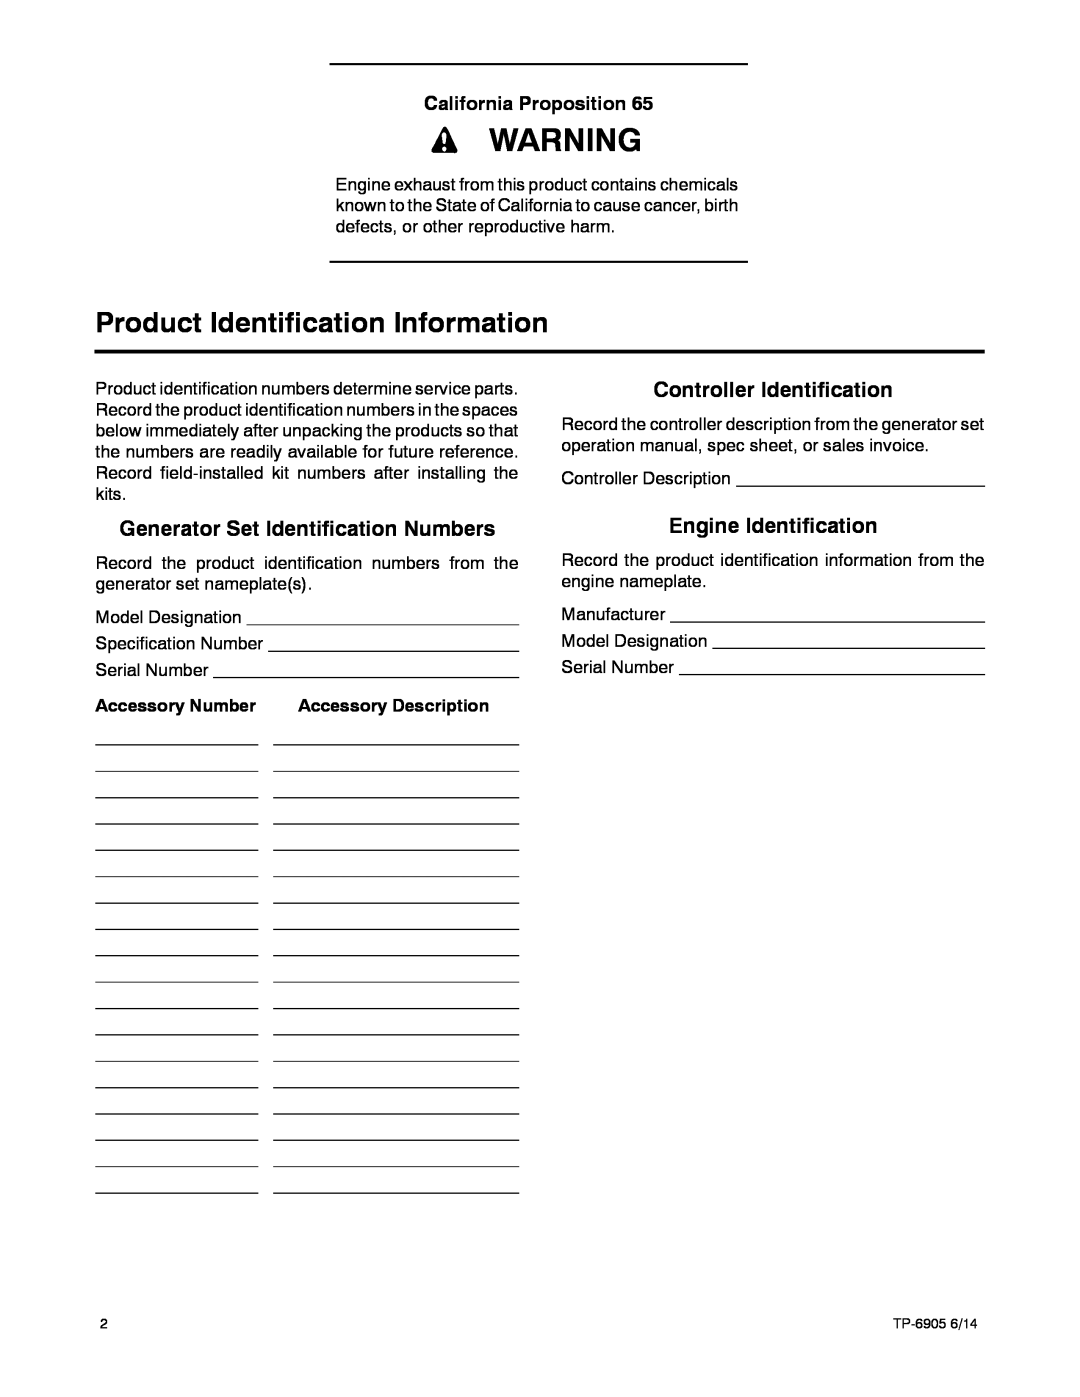 Kohler 24RCL manual Product Identification Information, Controller Identification, Generator Set Identification Numbers 